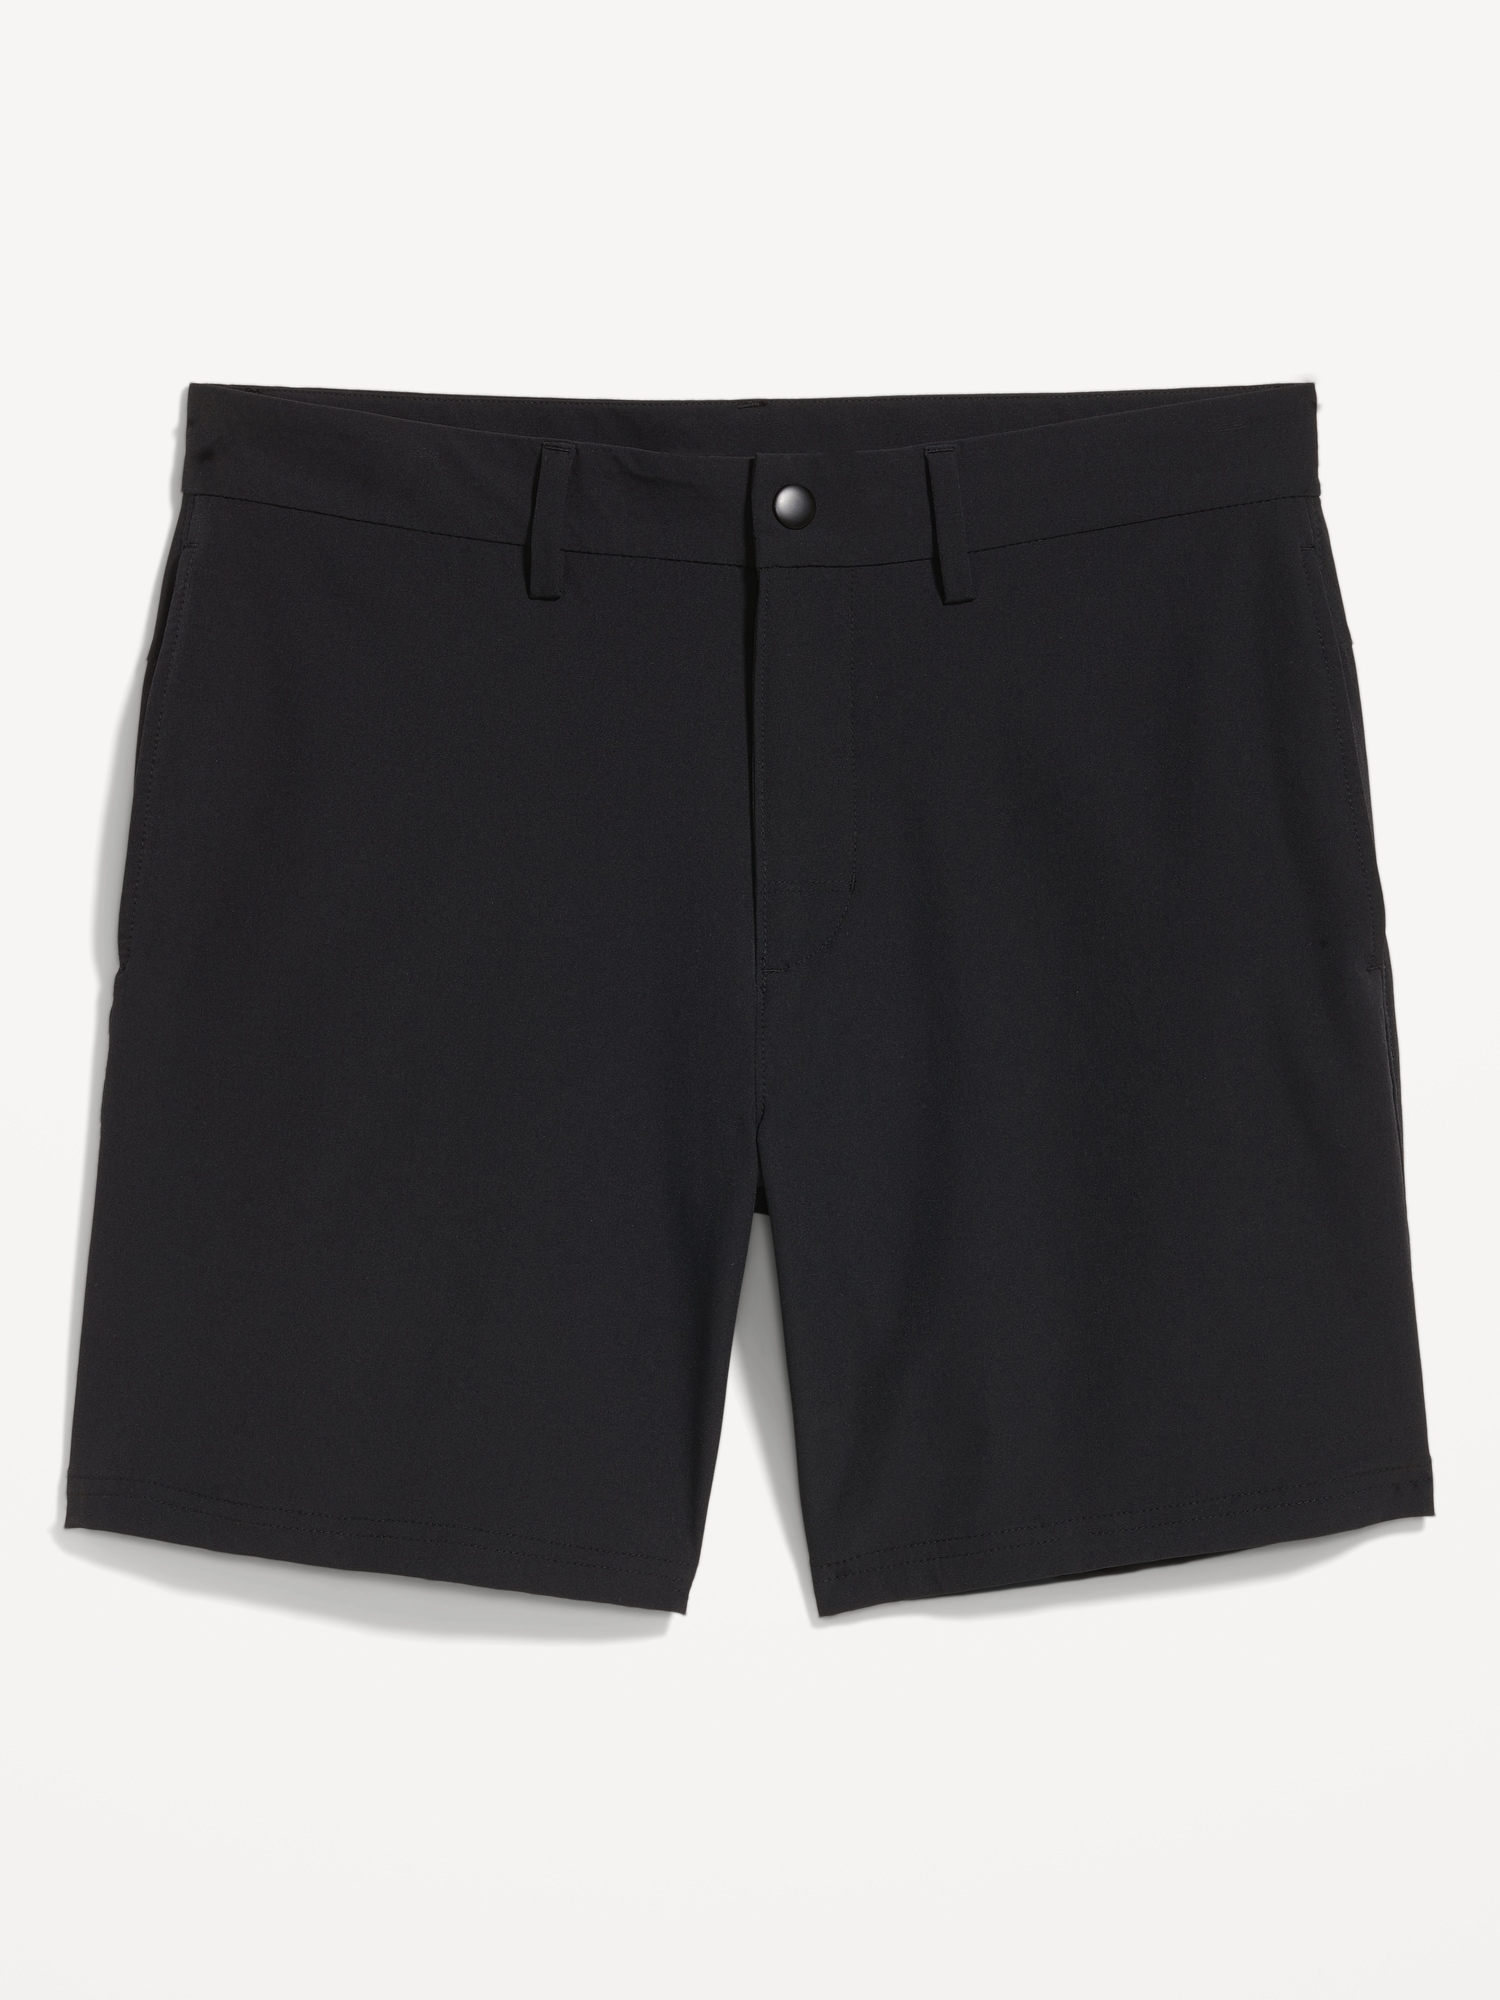 StretchTech Nylon Chino Shorts for Men -- 7-inch inseam | Old Navy